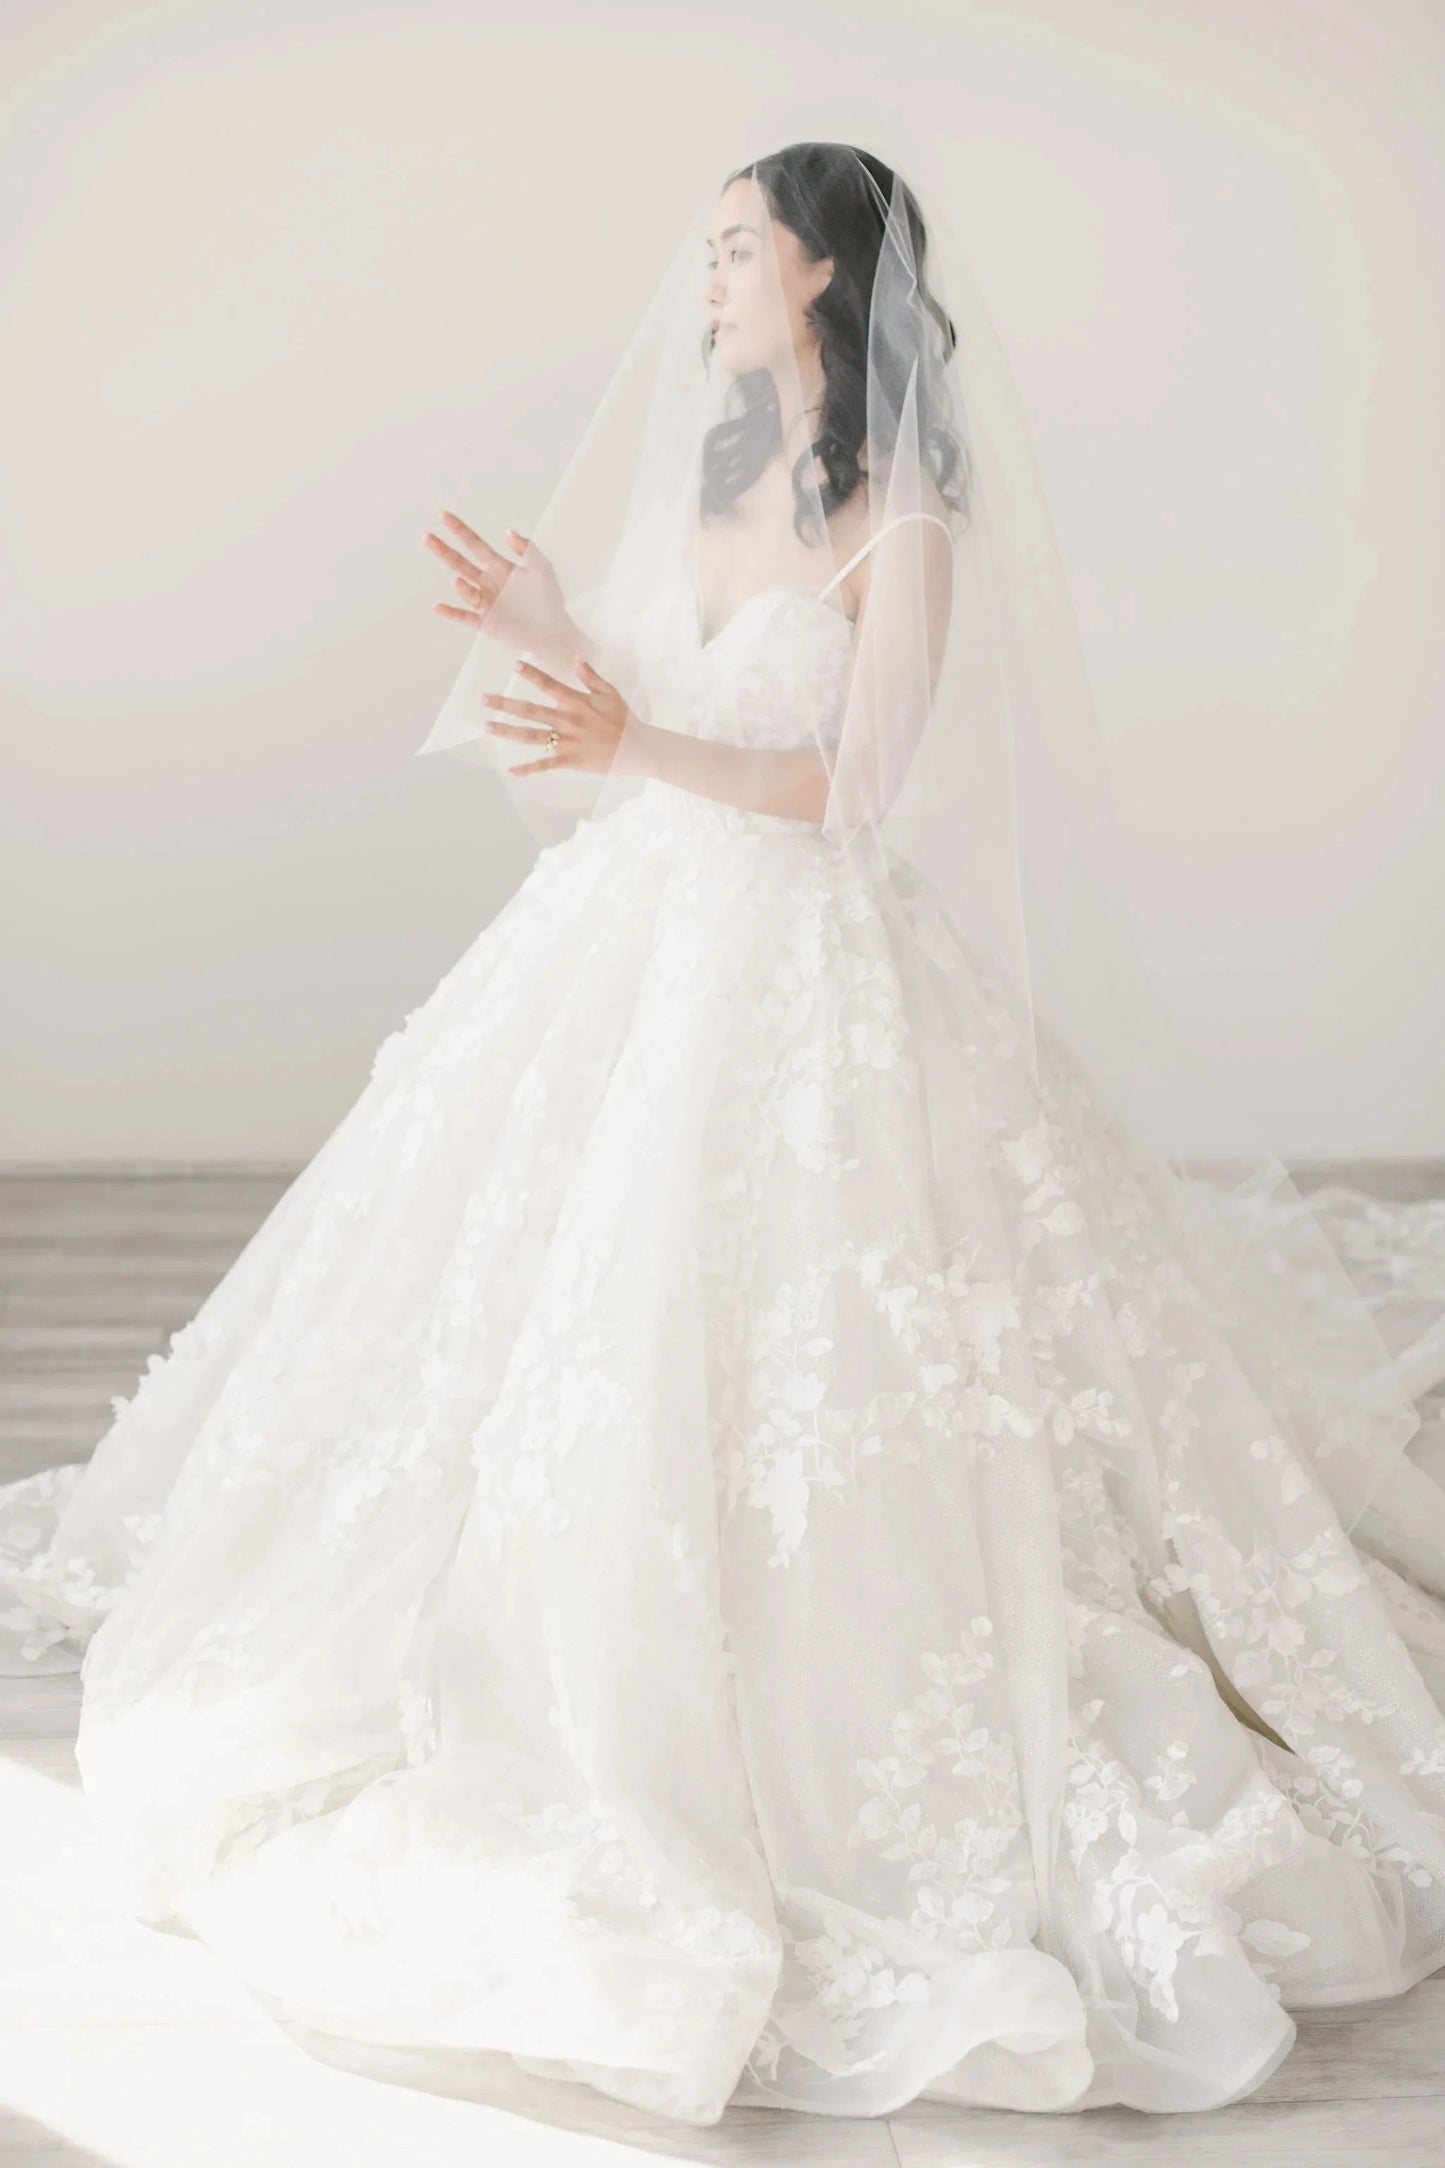 Tulle circle drop bridal veil - ready to ship Tessa Kim